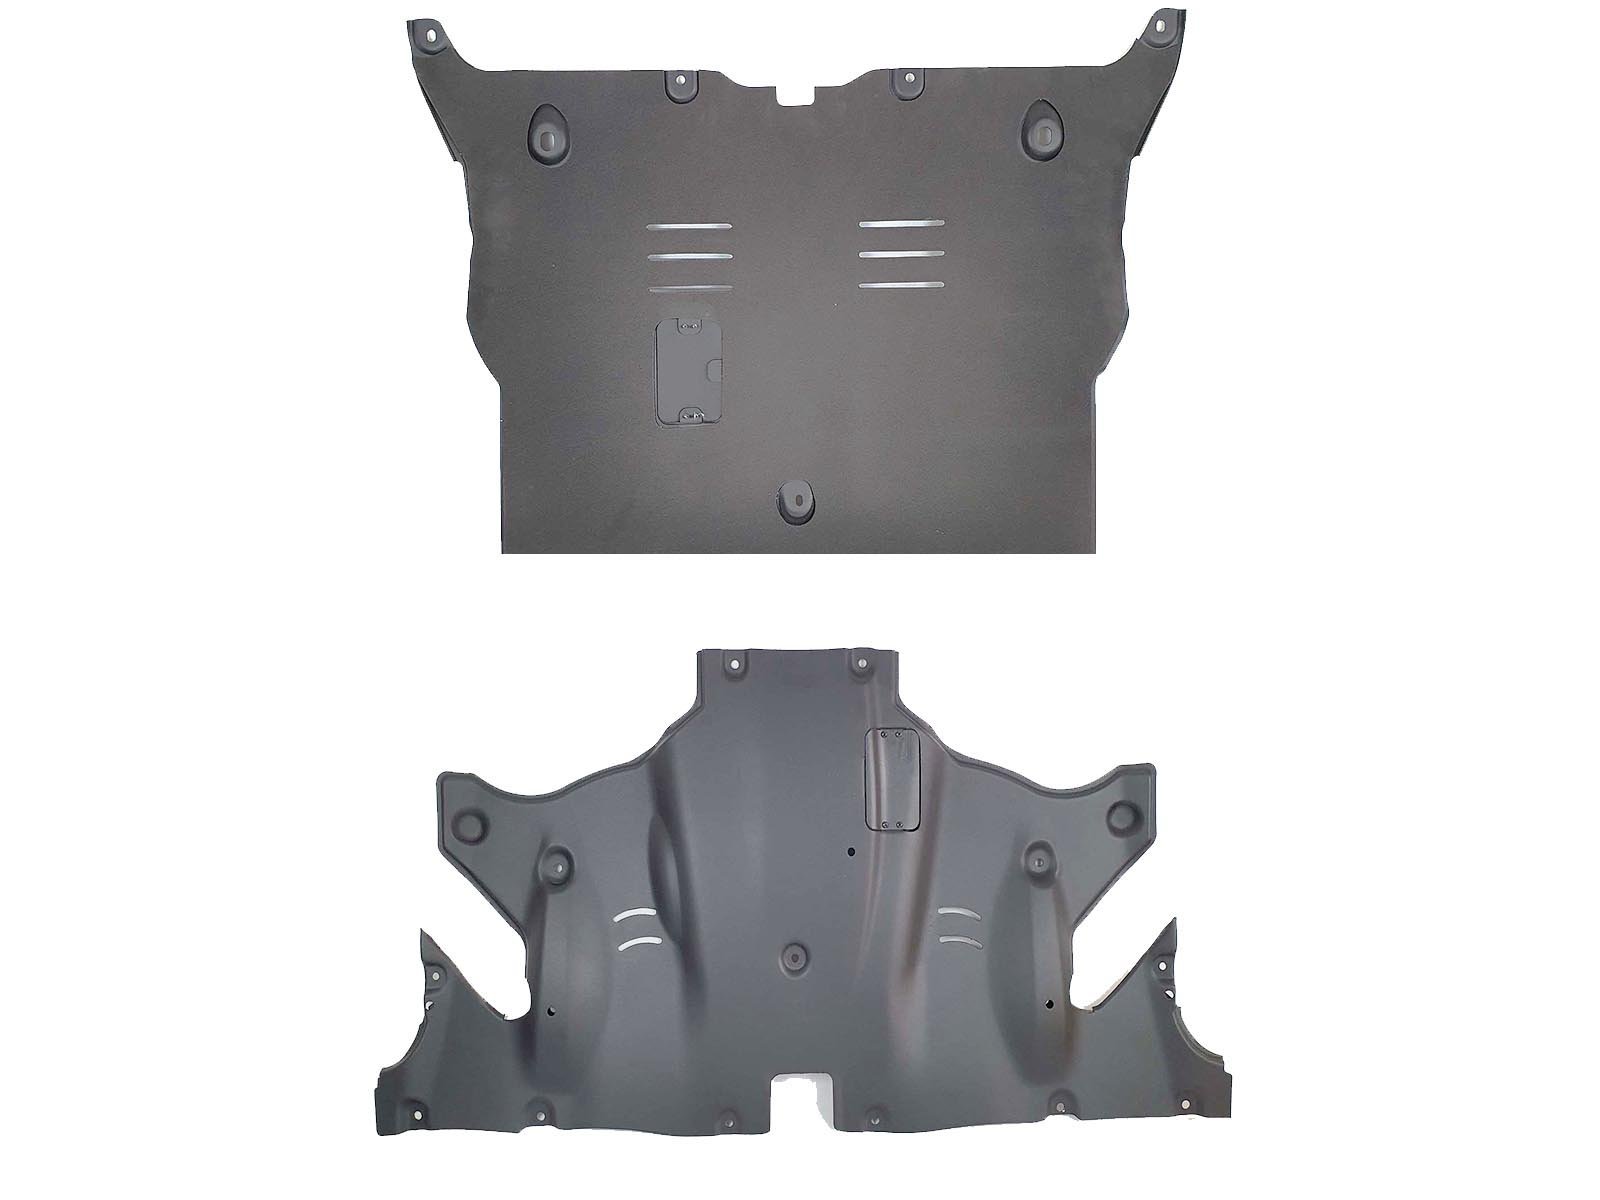 Model 3 Highland Schutzhülle für Luft auslass unter Sitz konsole Outlet  Protector Grille (2PCS)